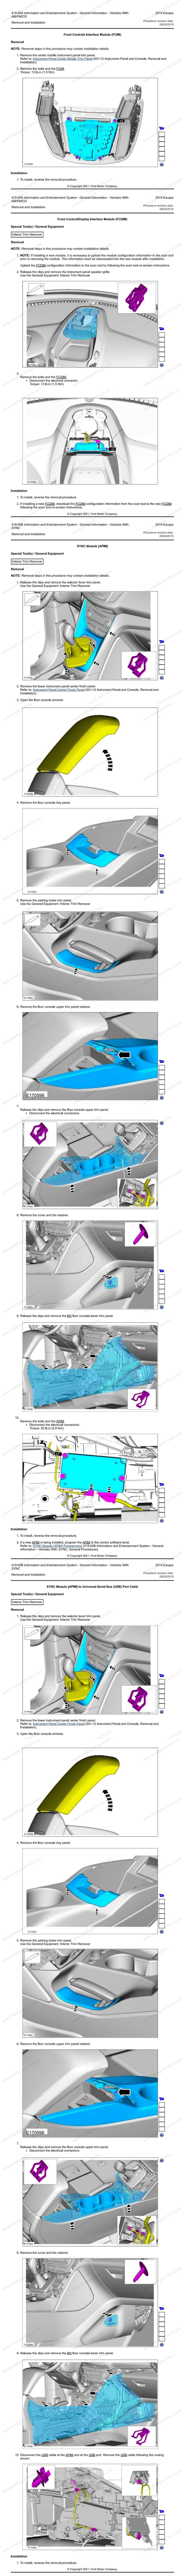 2014 Ford Escape Sync2 to Sync3 Upgrade